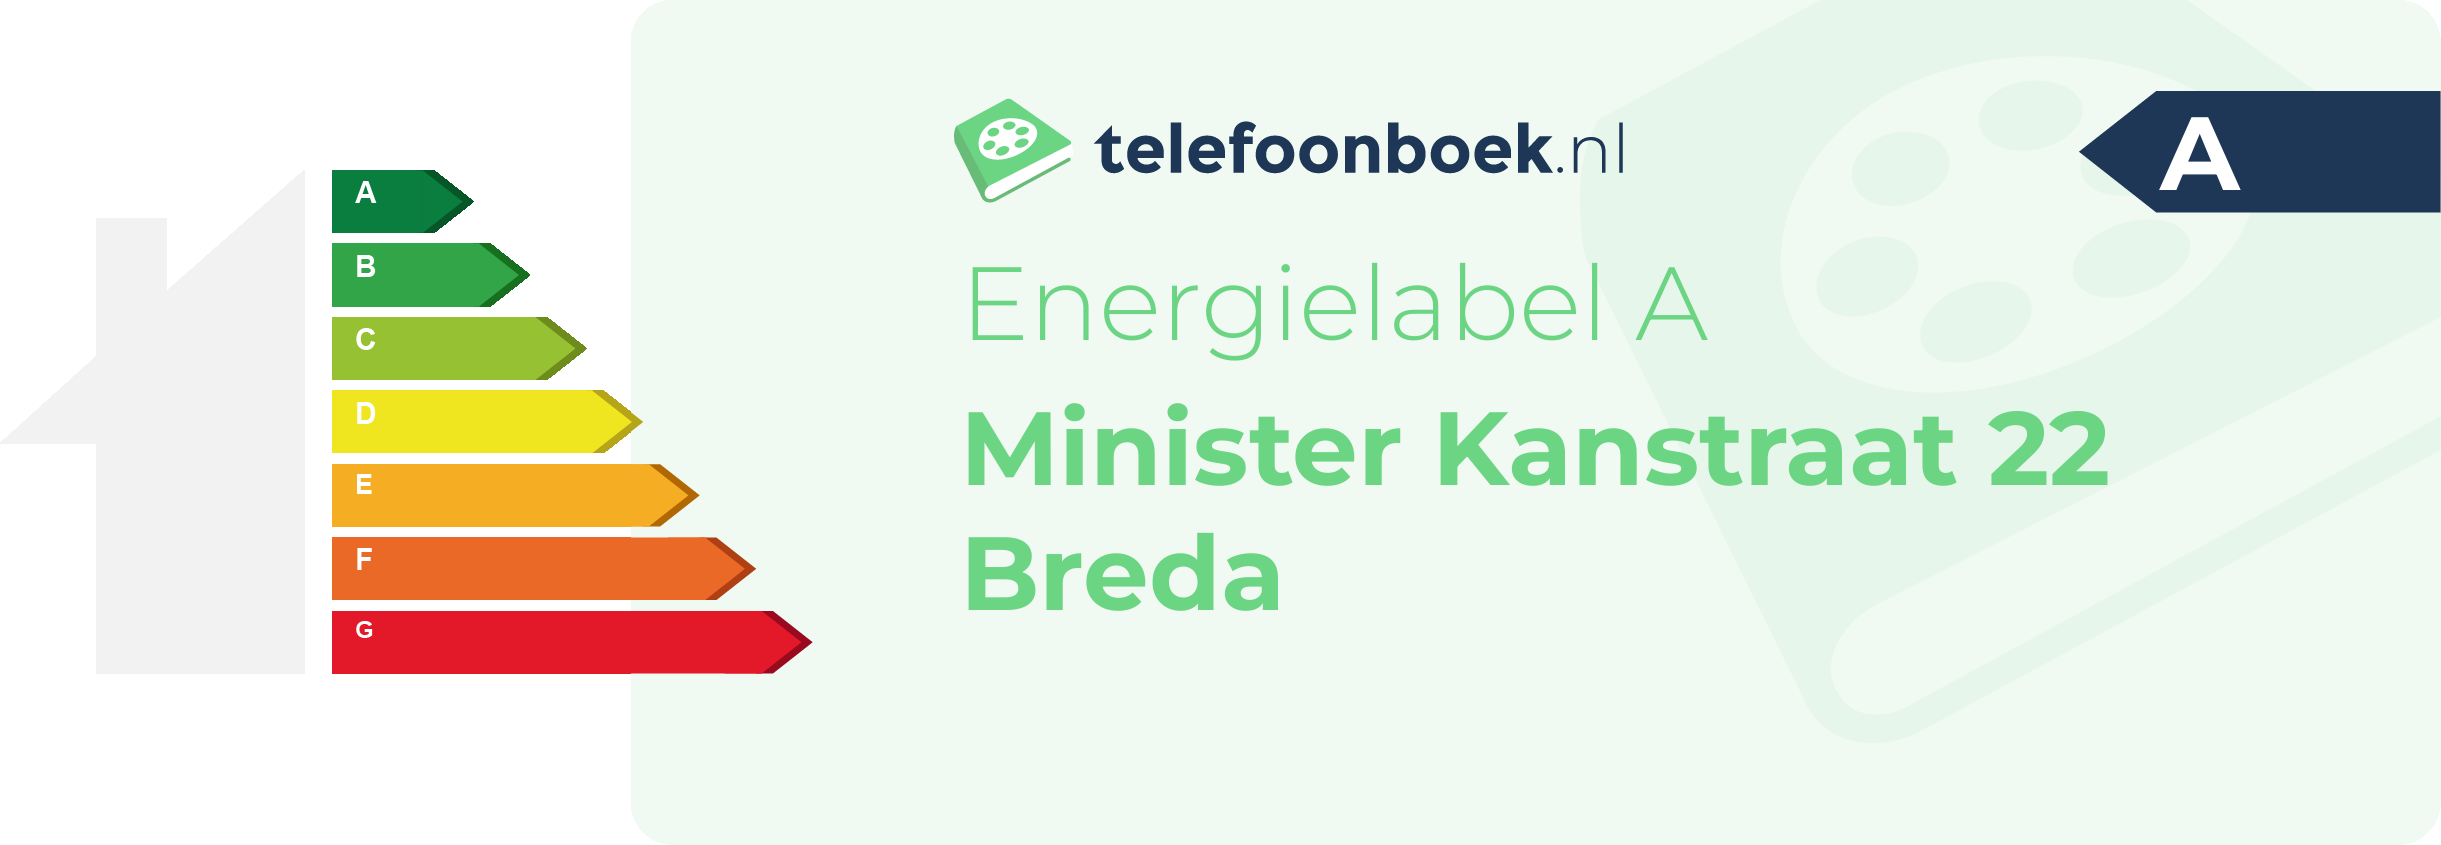 Energielabel Minister Kanstraat 22 Breda